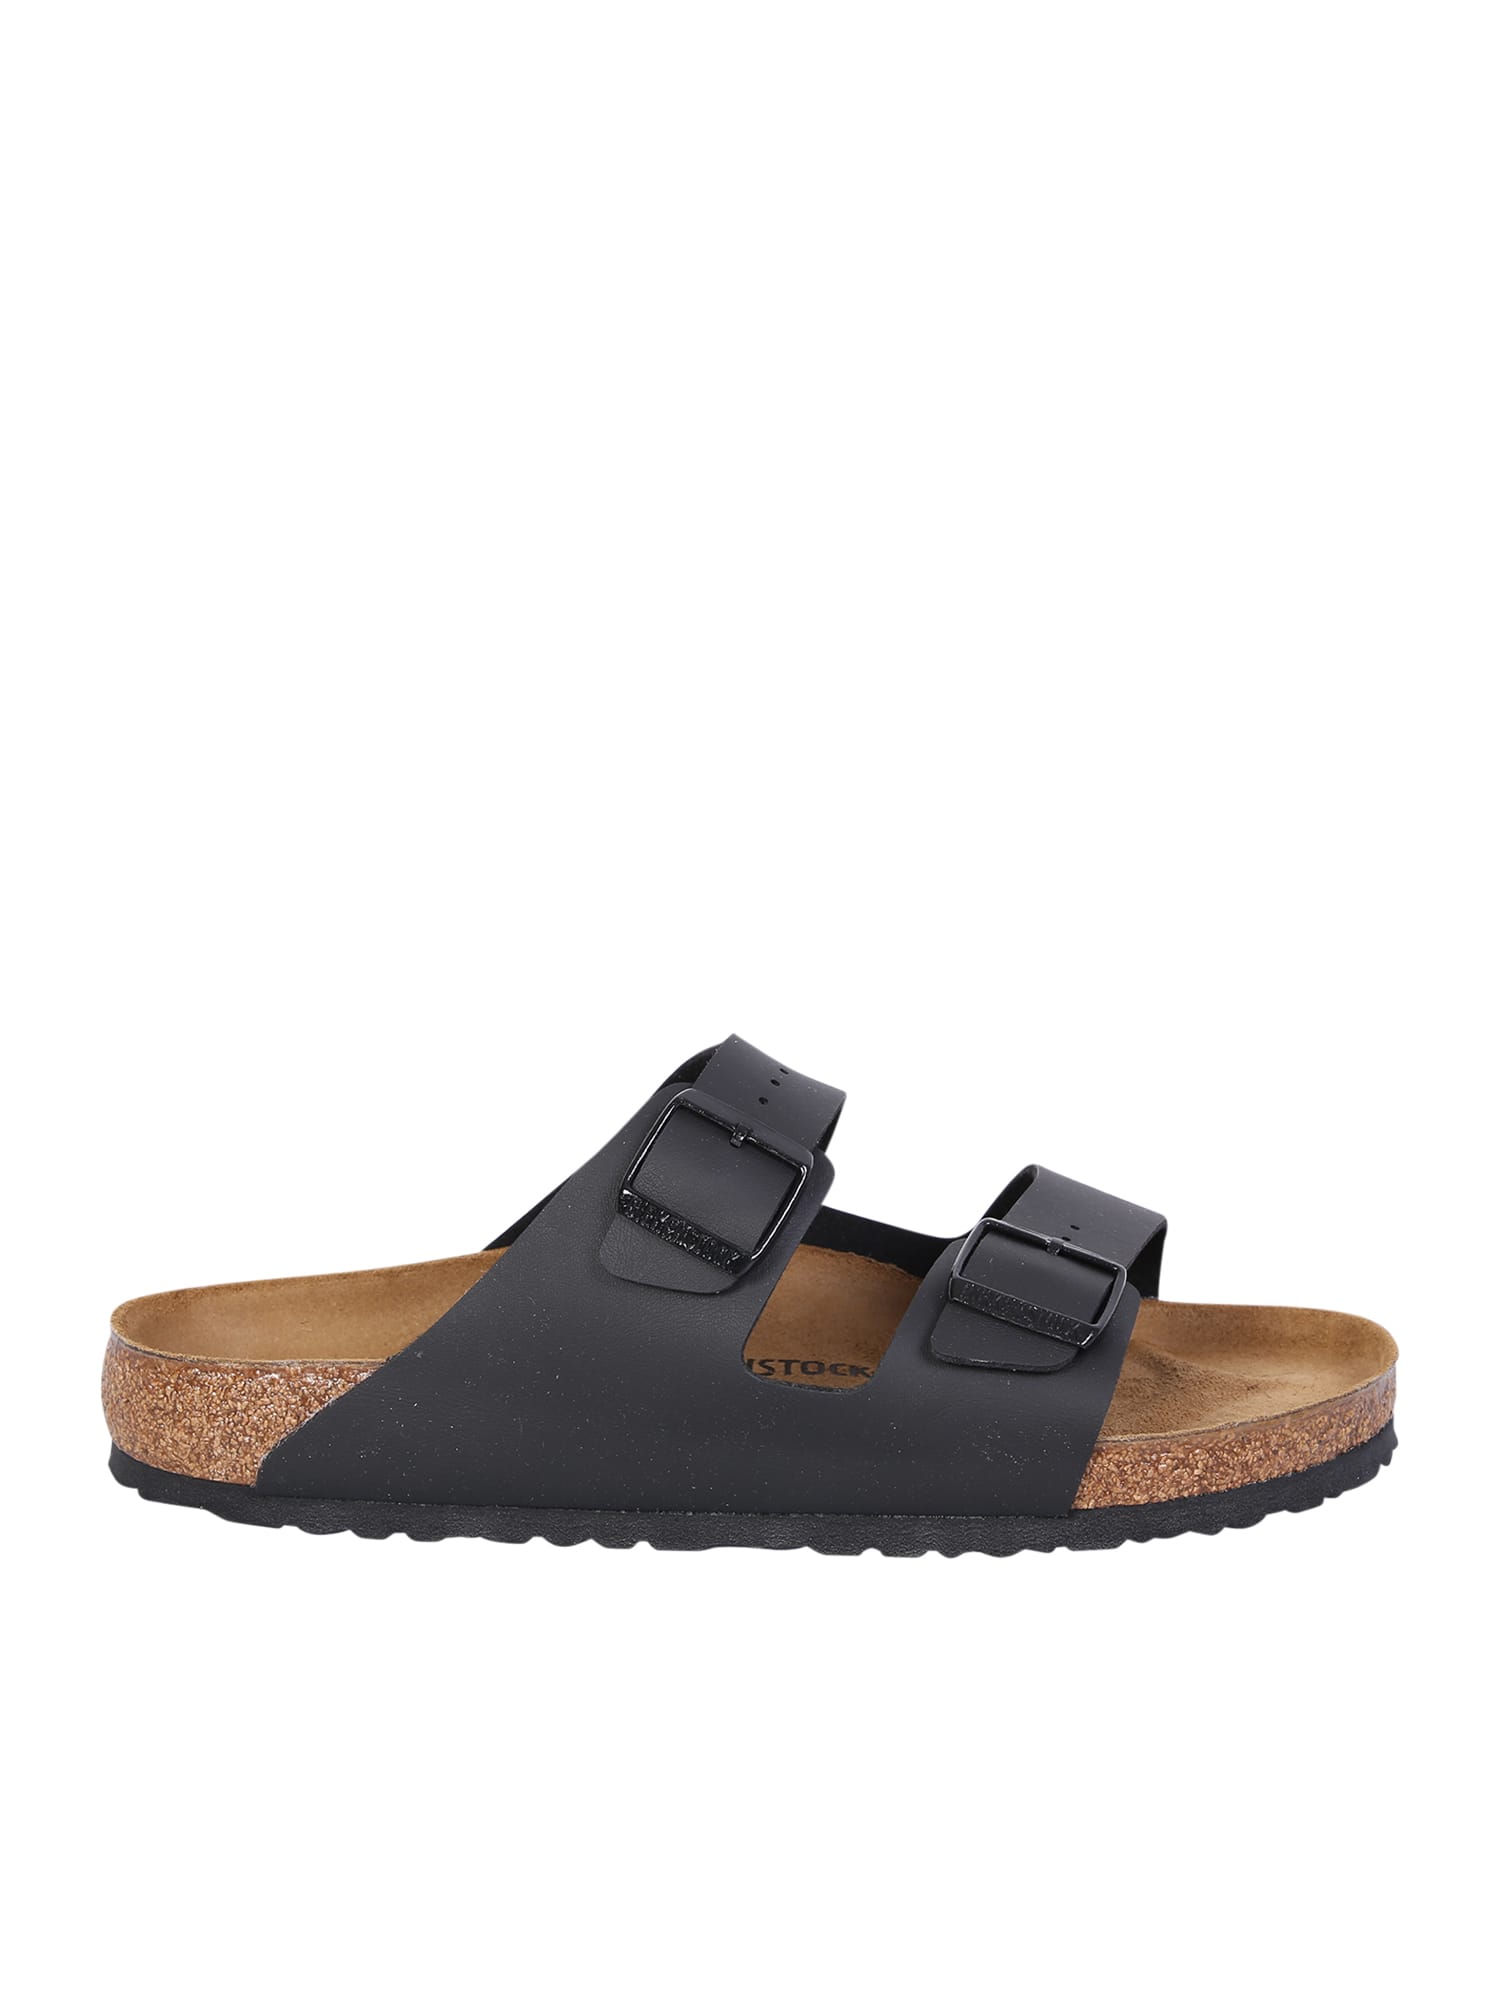 Birkenstock Double-strap Black Sandals